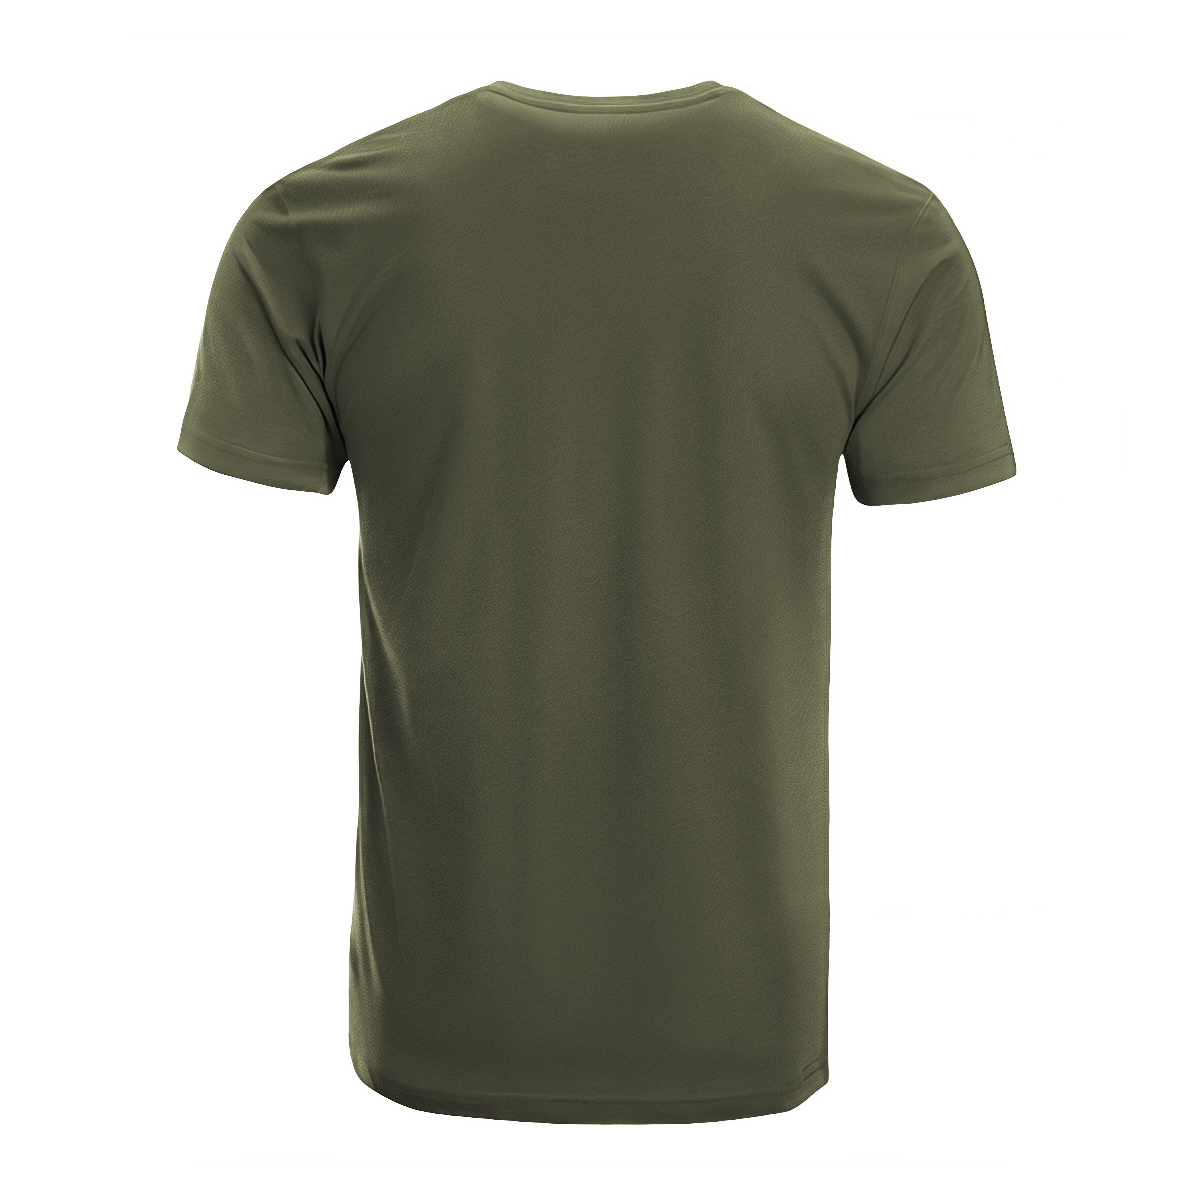 Adair Tartan Crest T-shirt - I'm not yelling style